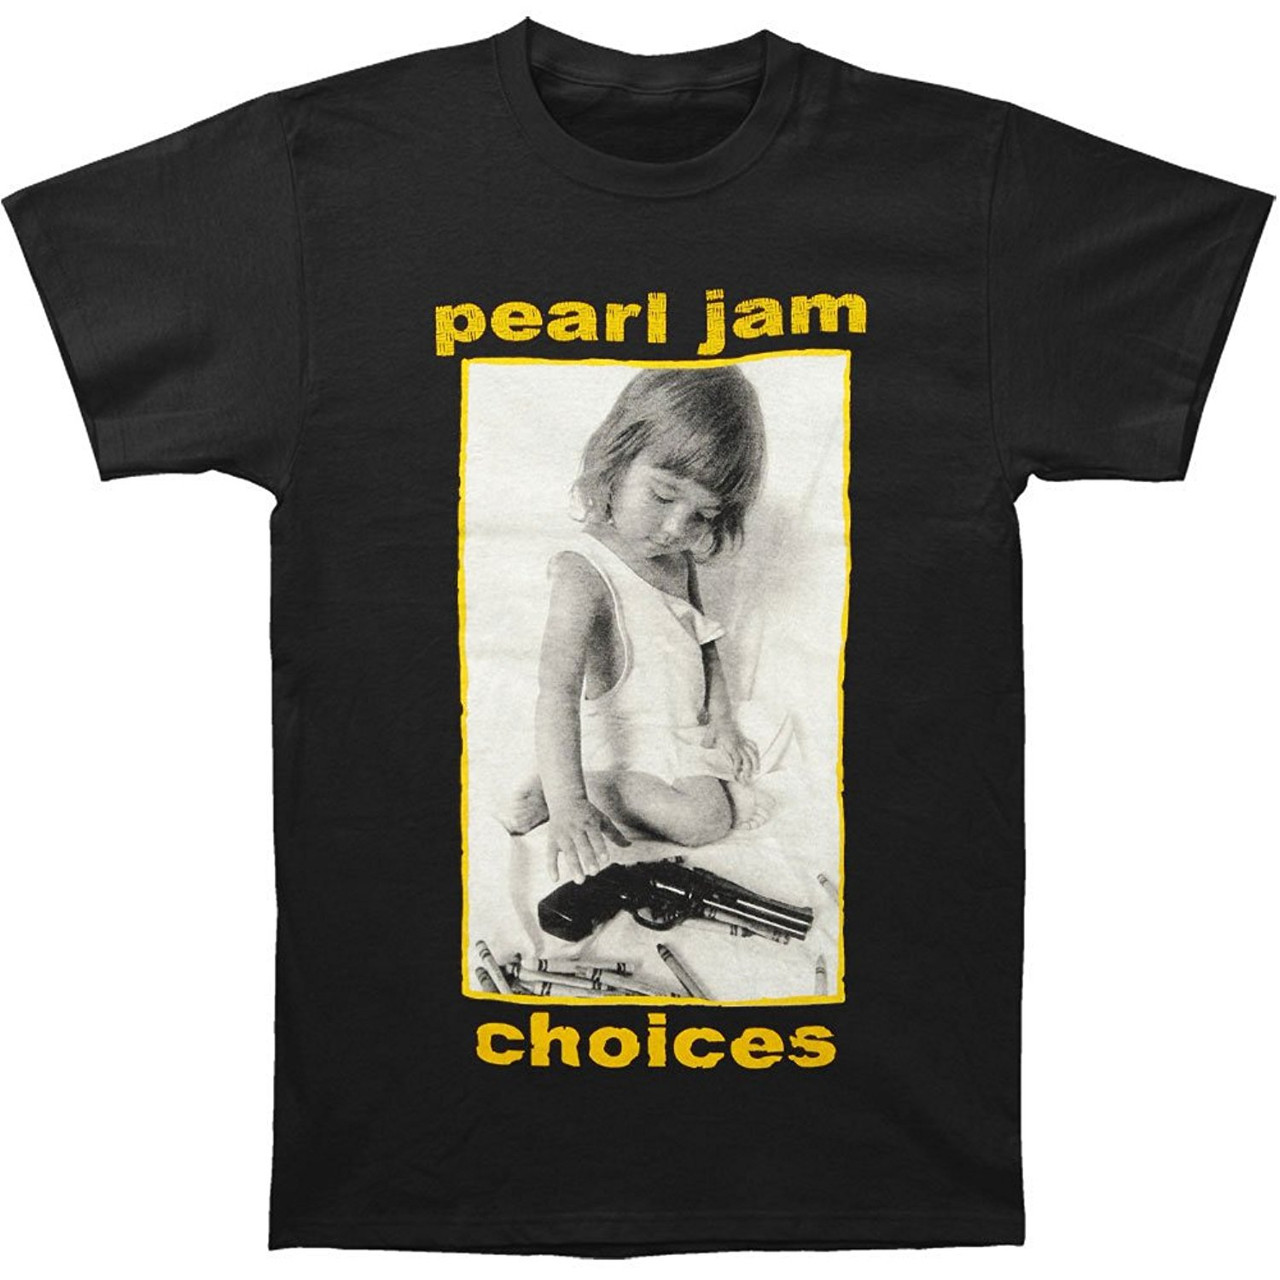 Pearl Jam TShirt Choices Merch2rock Alternative Clothing